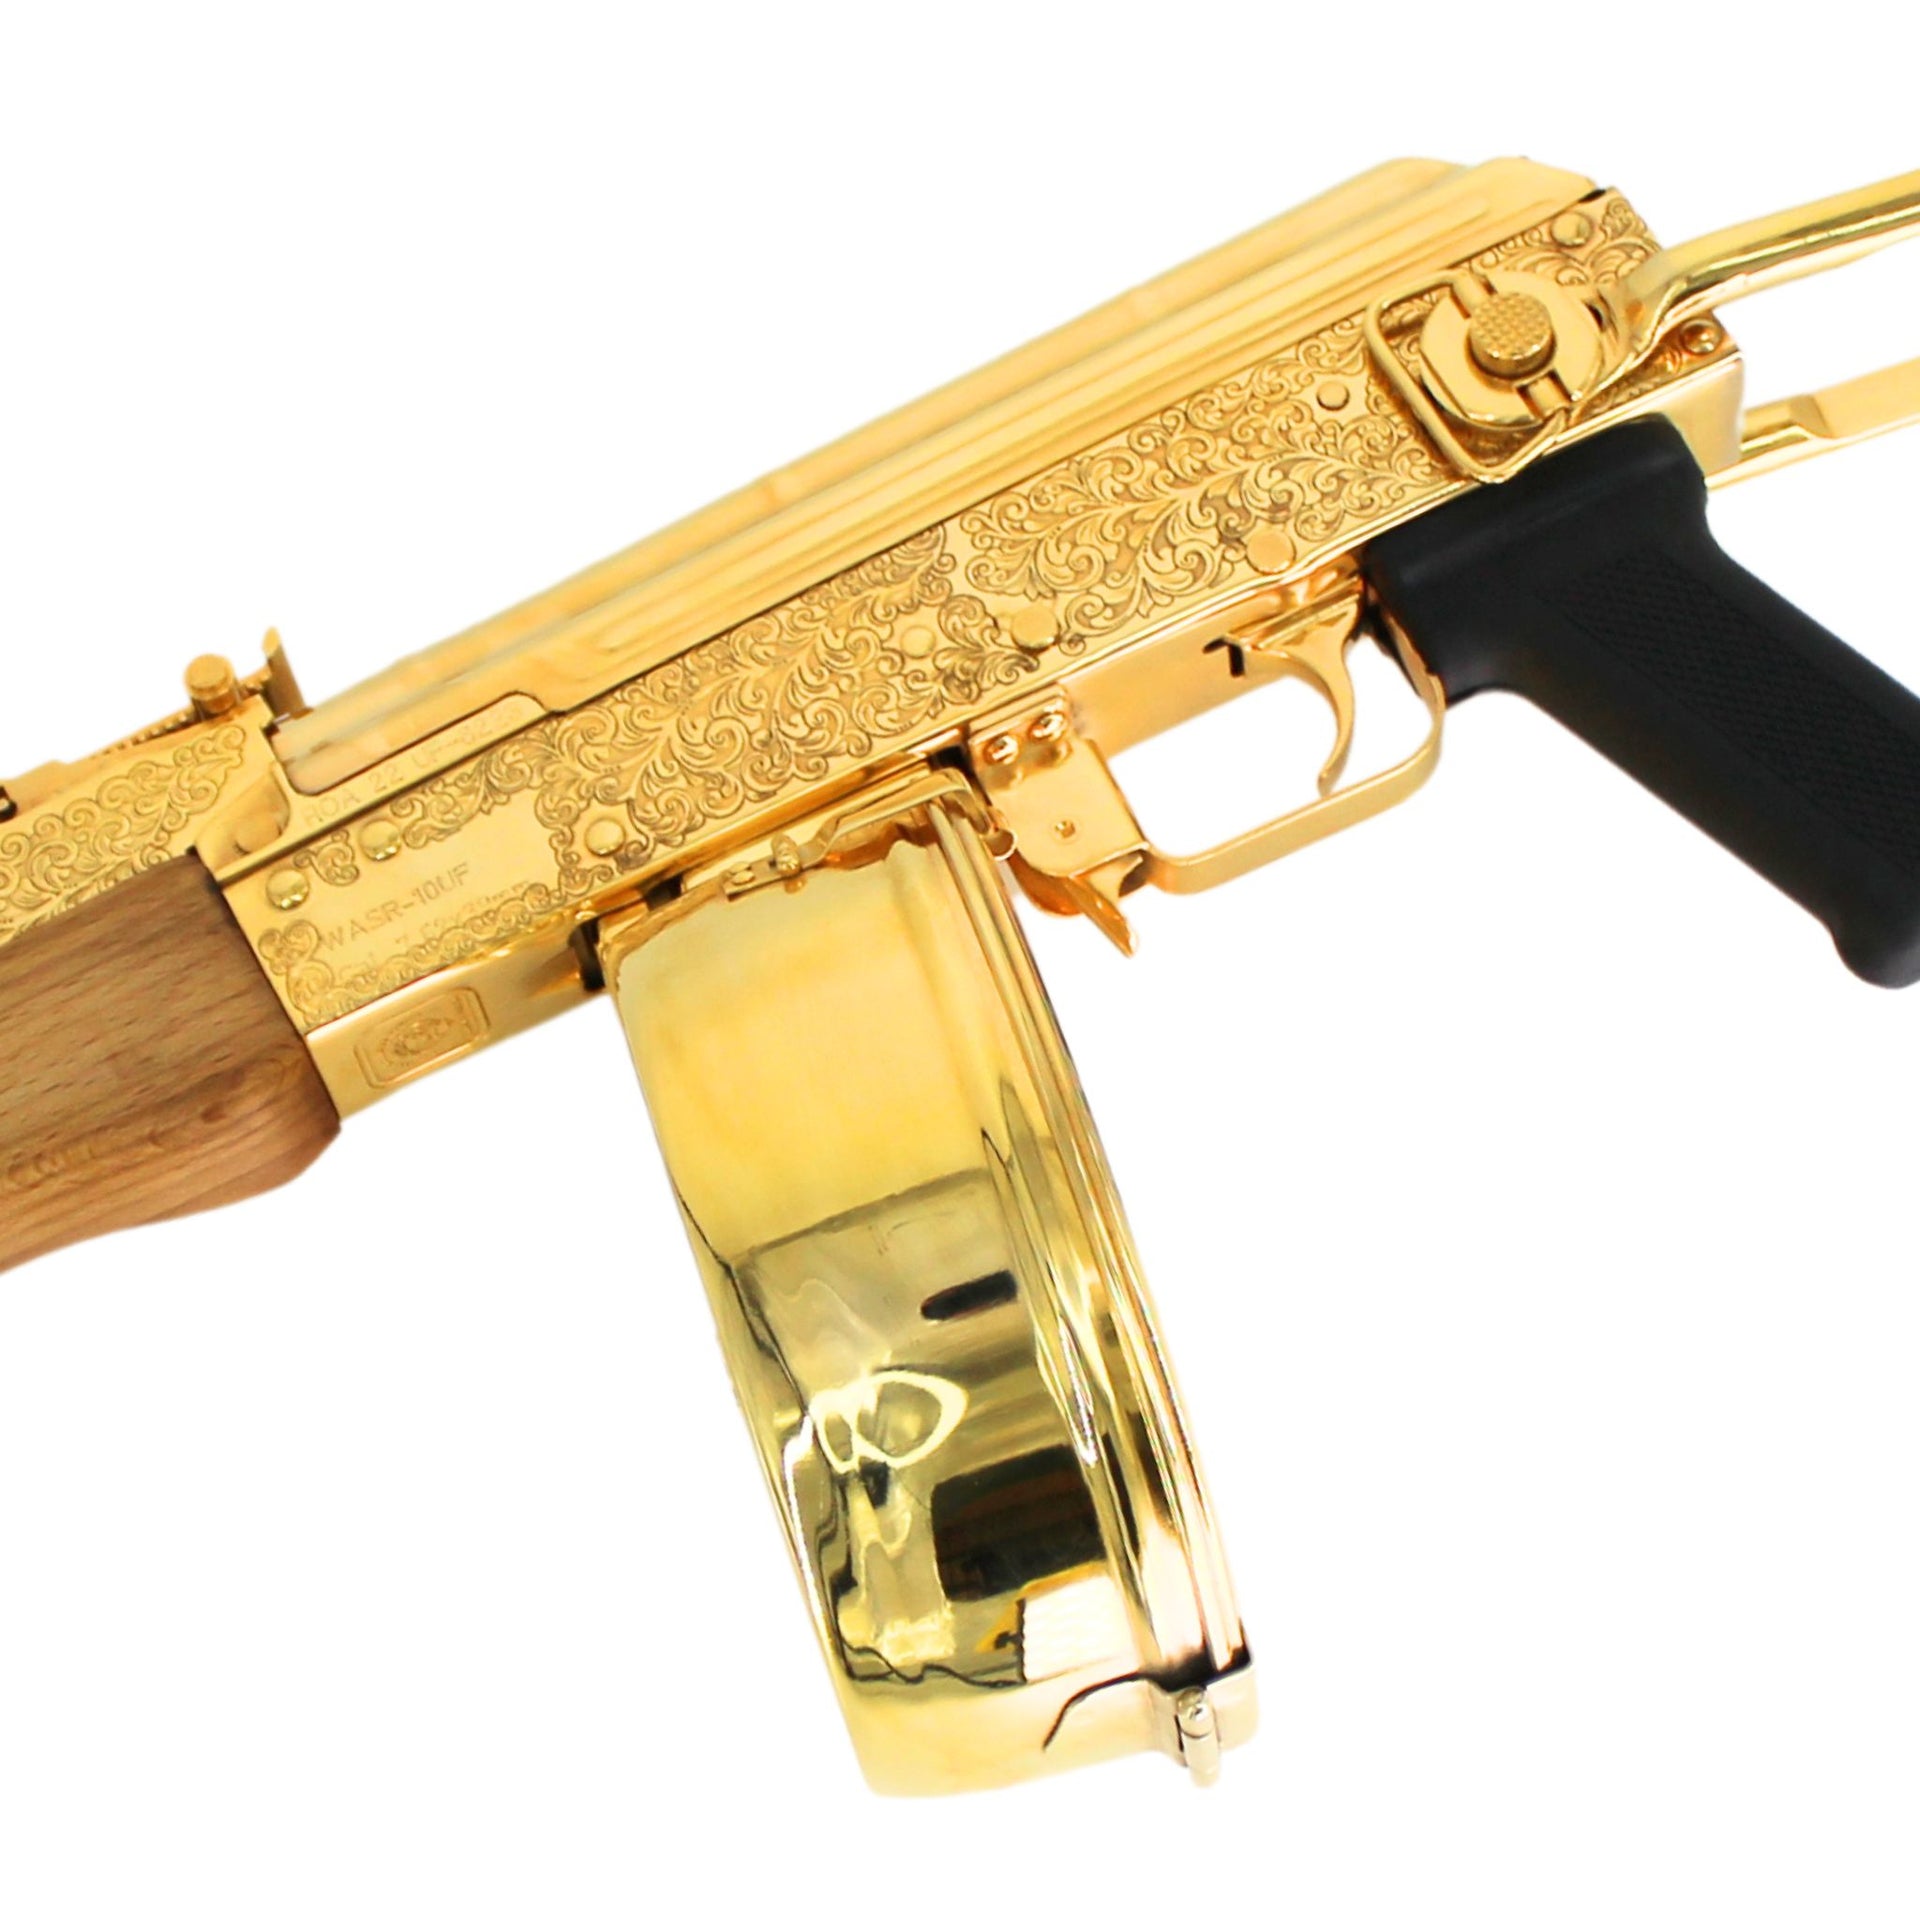 Ak 47 Century Arms Underfolder, 7.62x39mm,Engraved, 24 karat Gold Plated W/ 24k Gold Plated Drum Magazine  SKU: 6963834716262,Gold AK 47, Gold Gun, Gold Firearm